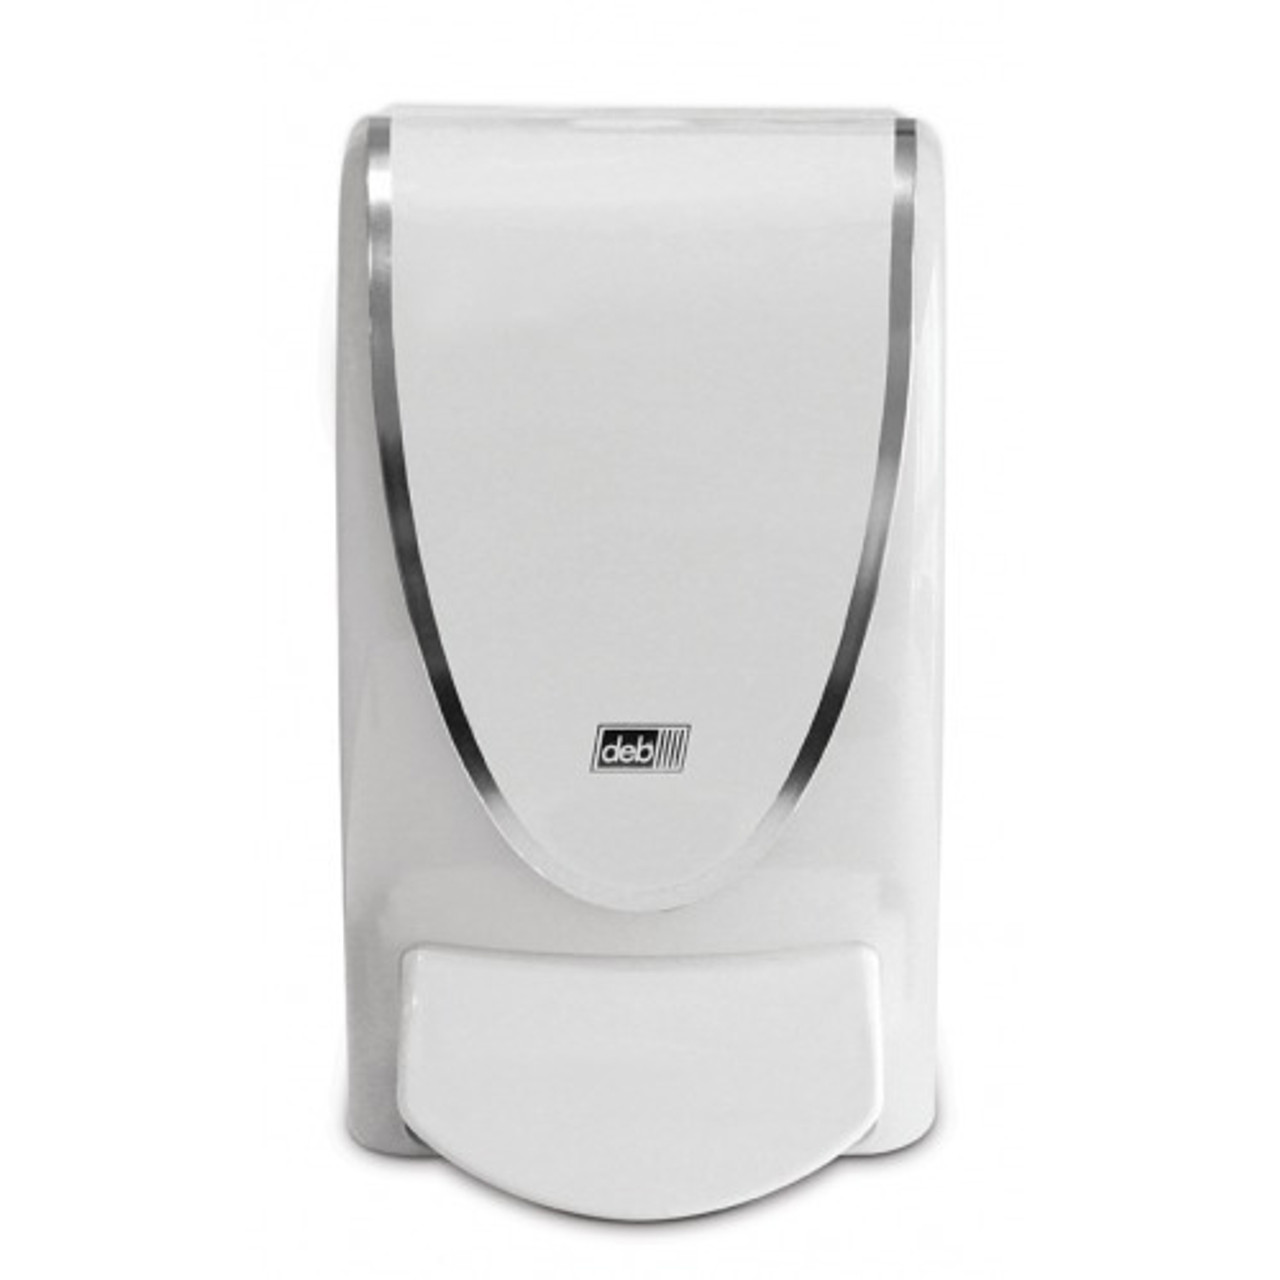 Deb® Cleanse Washroom Proline 1L Manual Dispenser - Translucent White  TWH1LDS